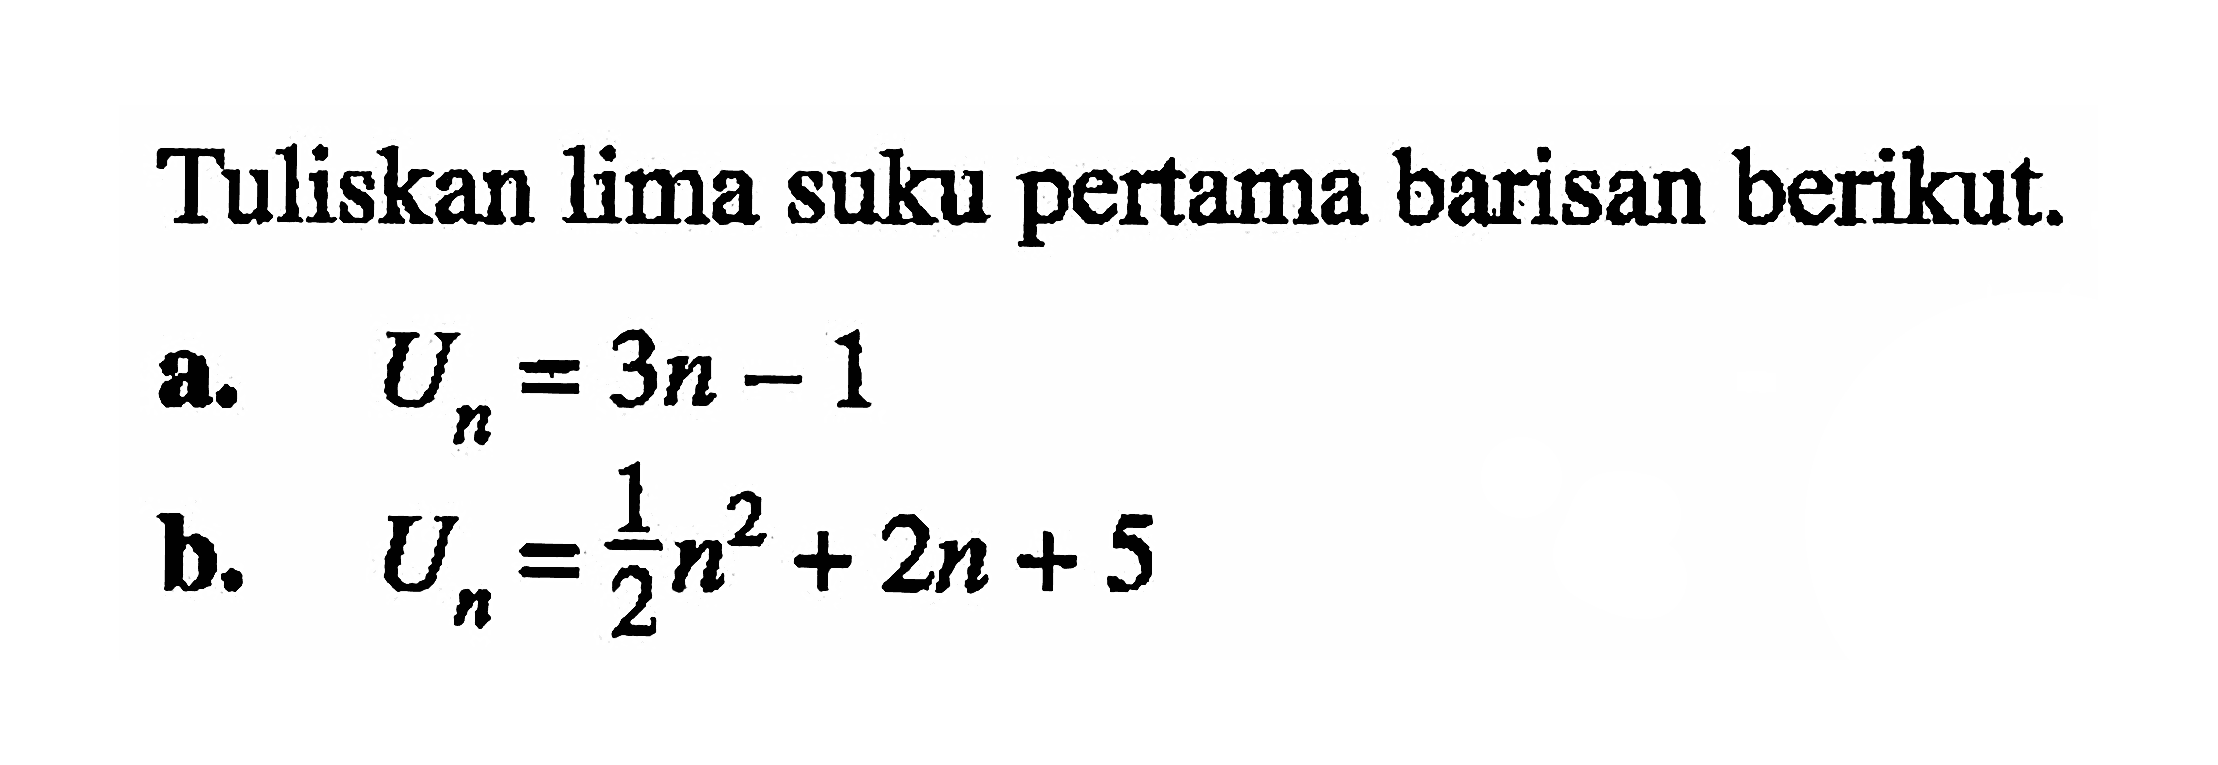 Tuliskan lima suku pertama barisan berikut. a. Un = 3n - 1 b. Un= 1/2 n^2 + 2n + 5